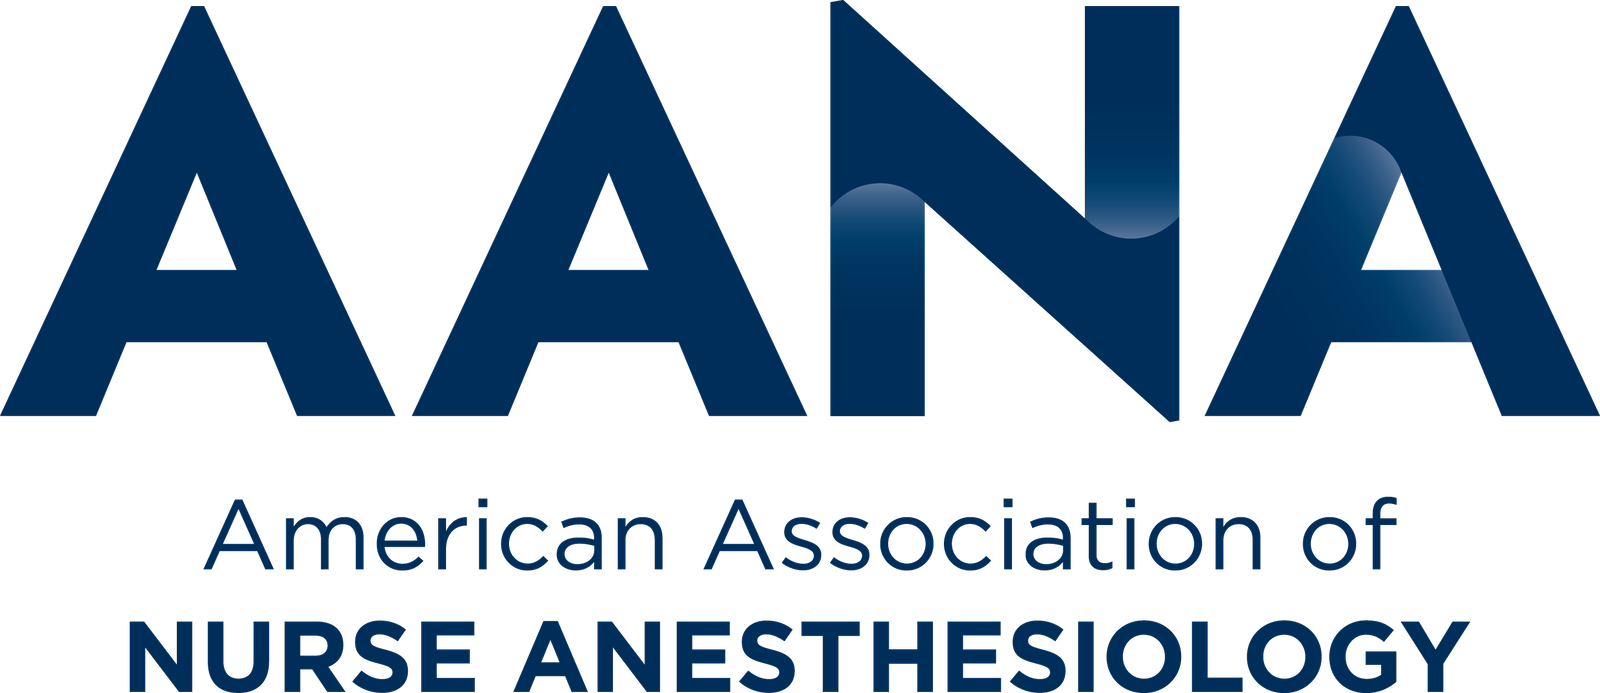 American Association of Nurse Anesthesiology Company Logo